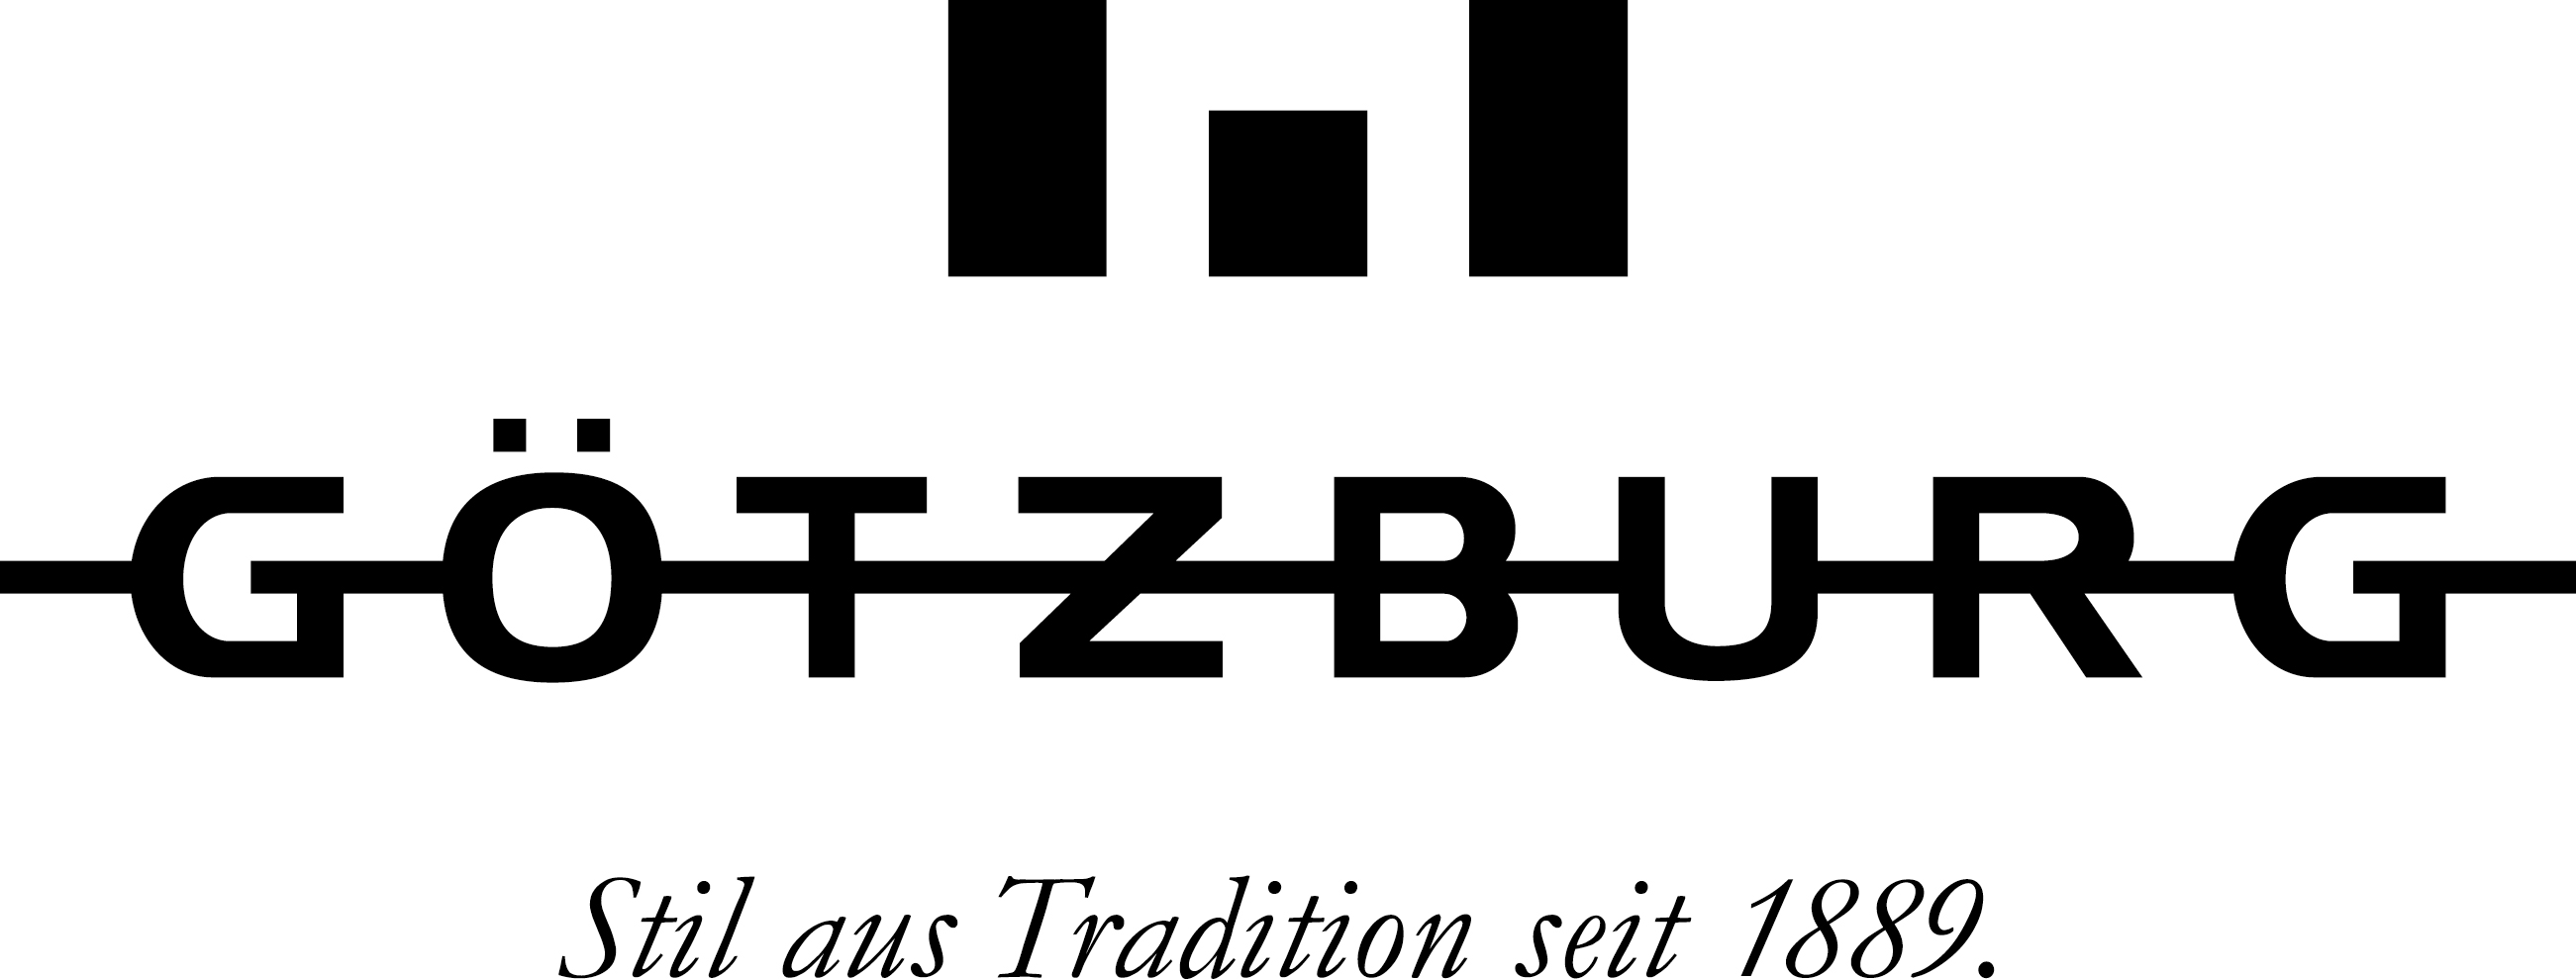 Götzburg logo